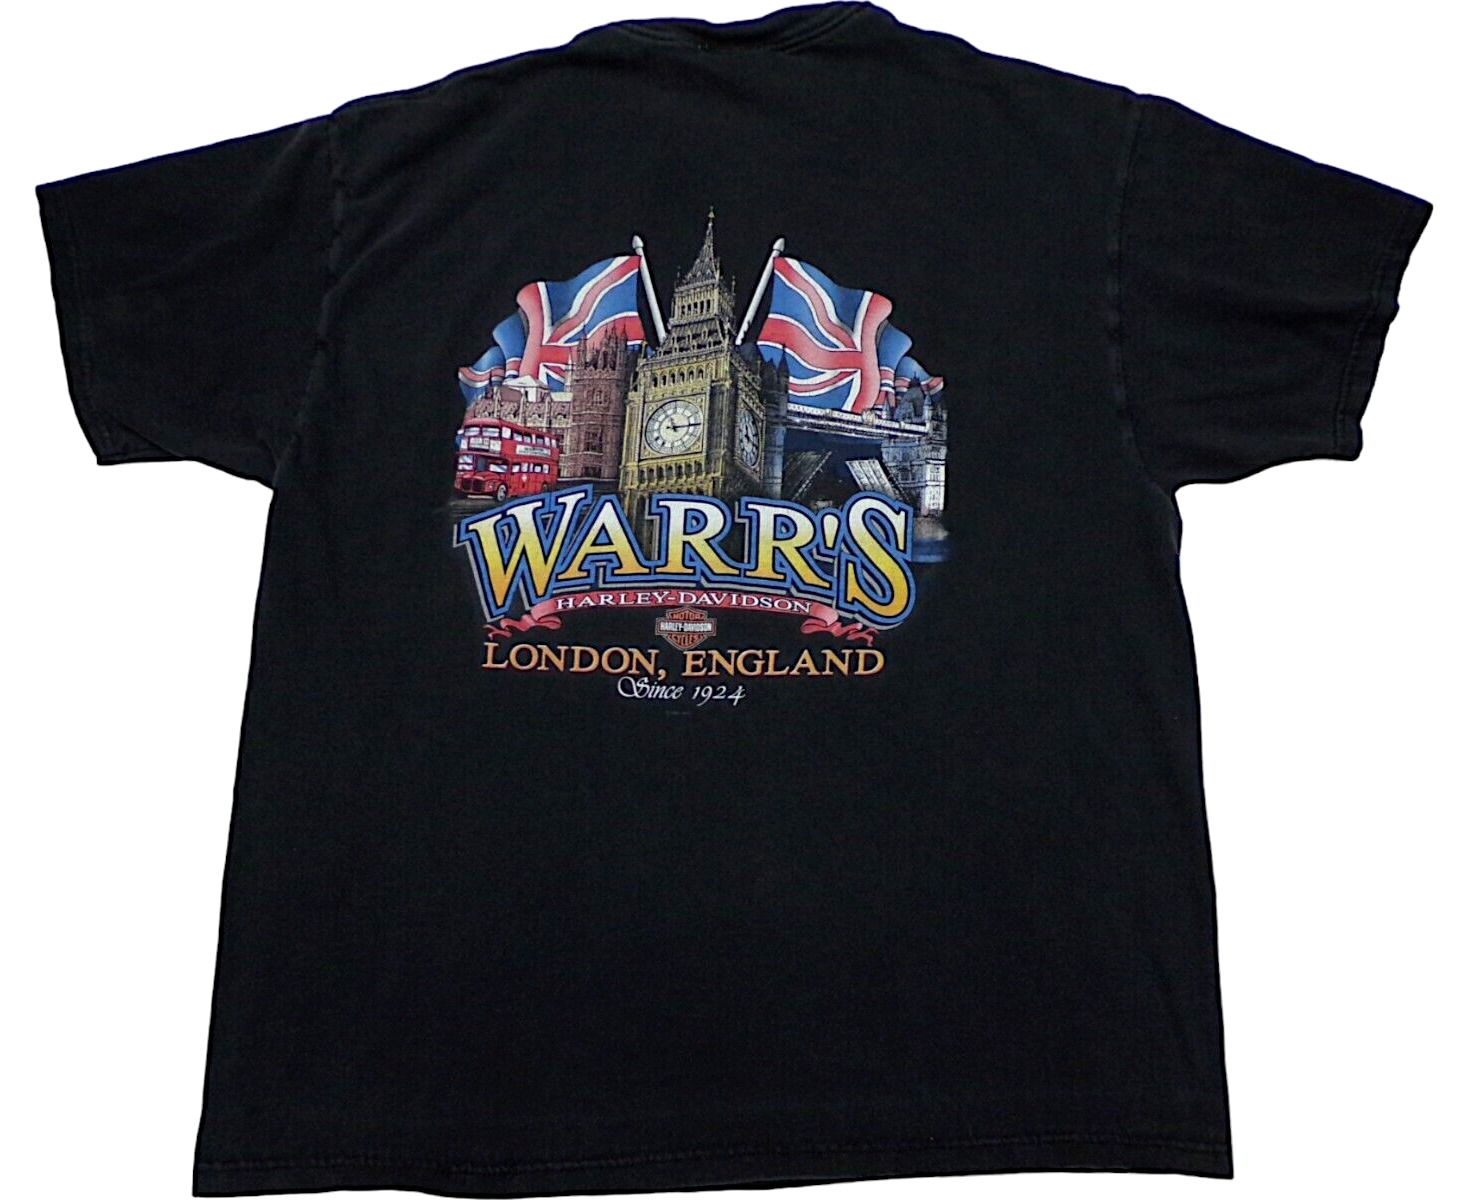 Harley Davidson London England Shirt Men's XL Warr's Made in USA Vtg 2001